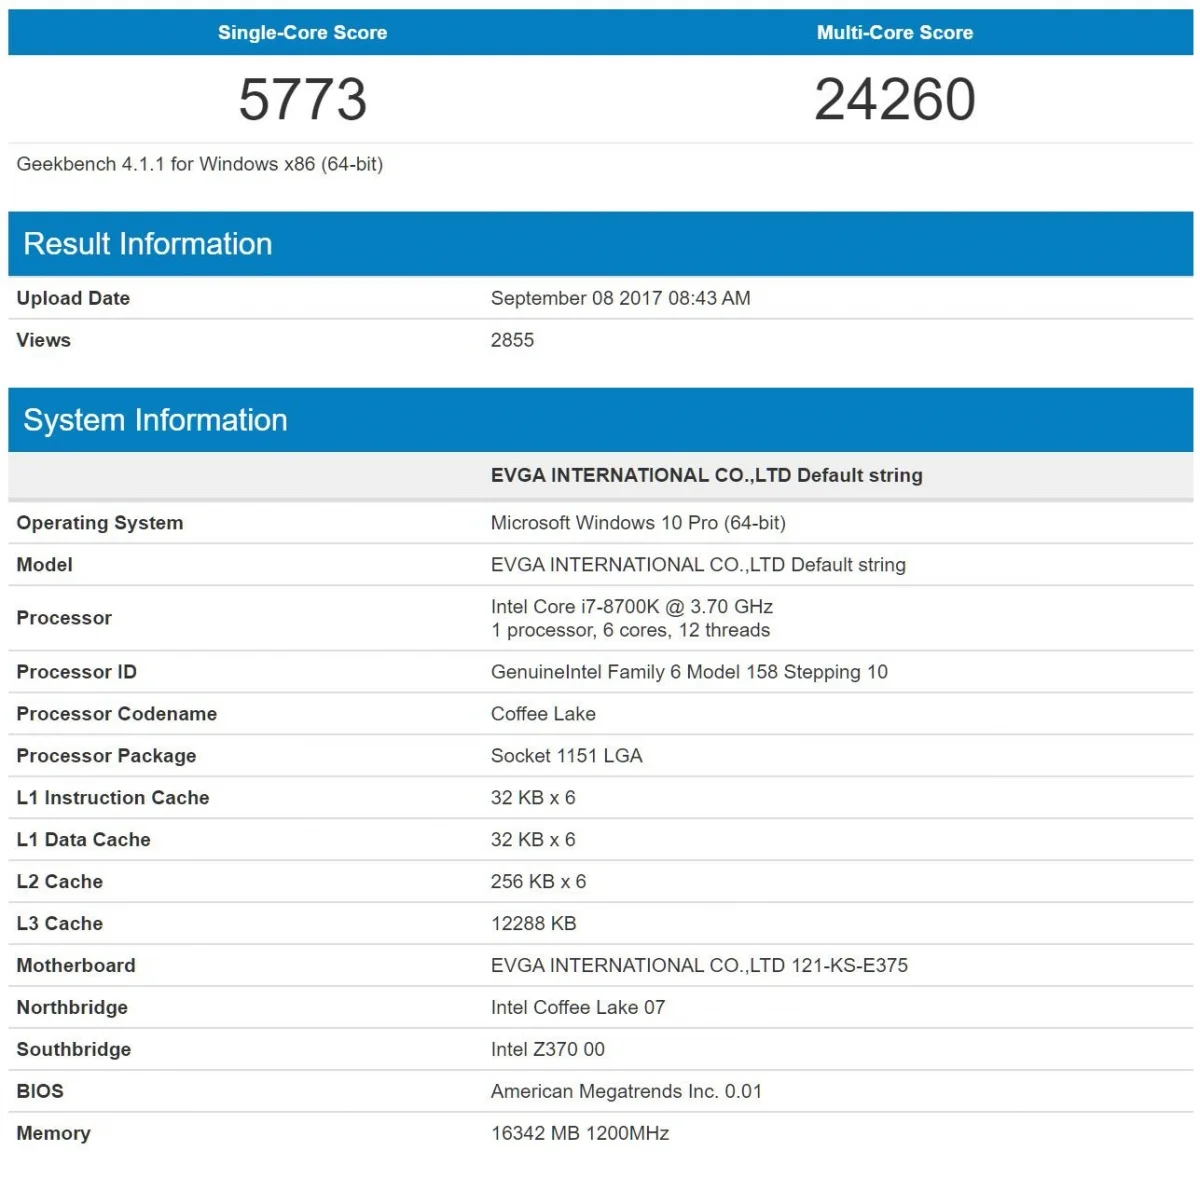 Intel Core i7-8700K сравнили с Ryzen 7 1800X по производительности - фото 1